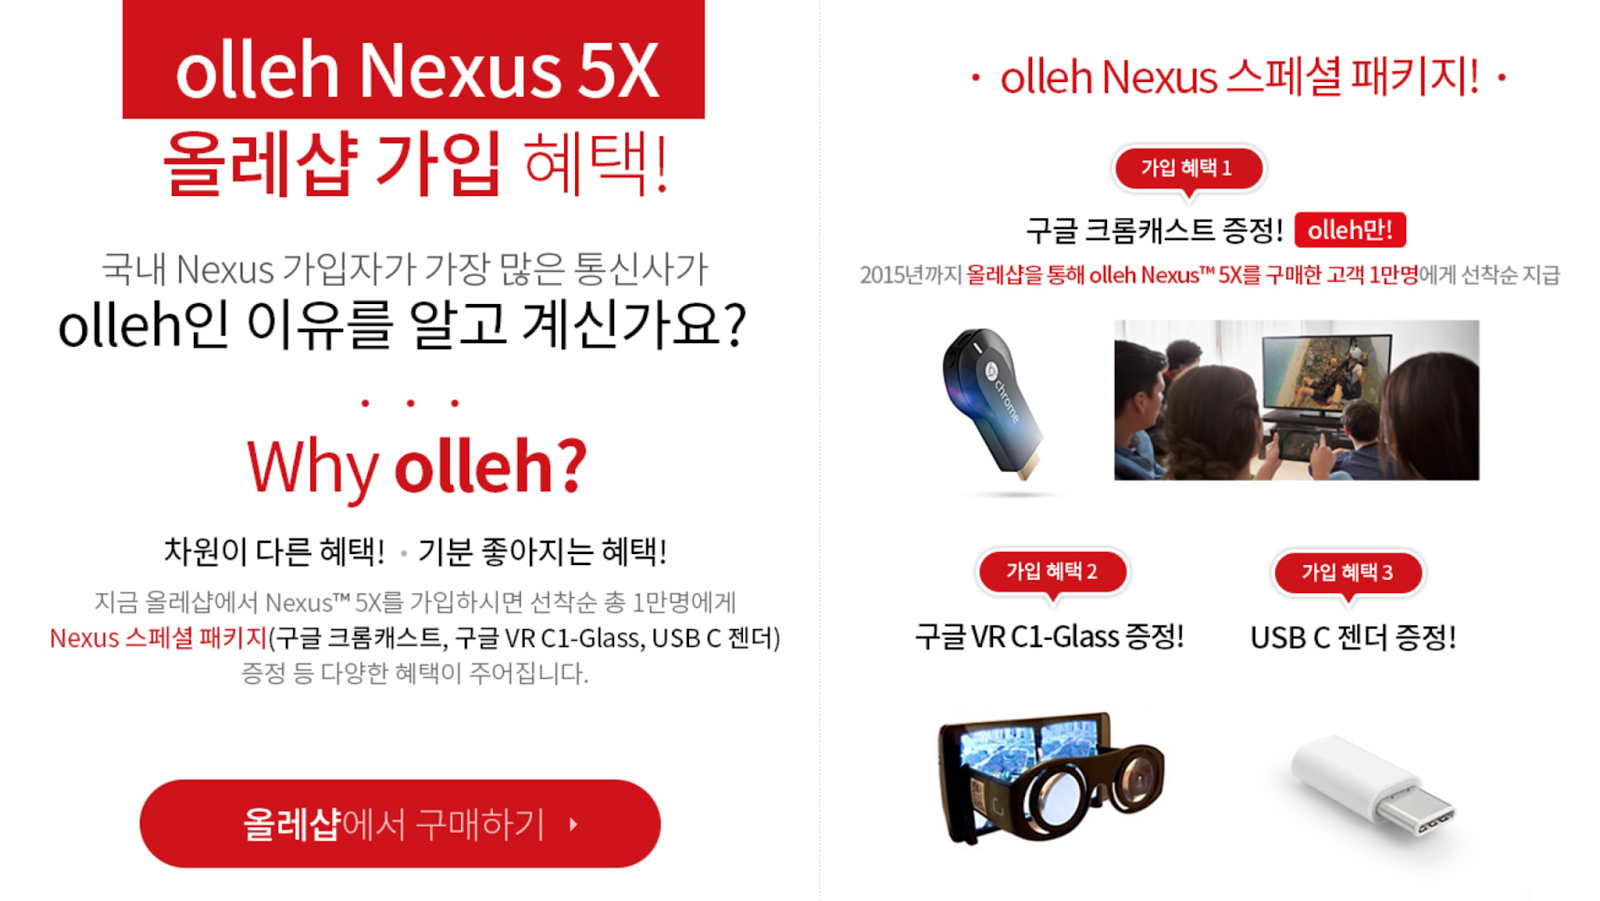 http://www.olleh-nexus.com/whyolleh